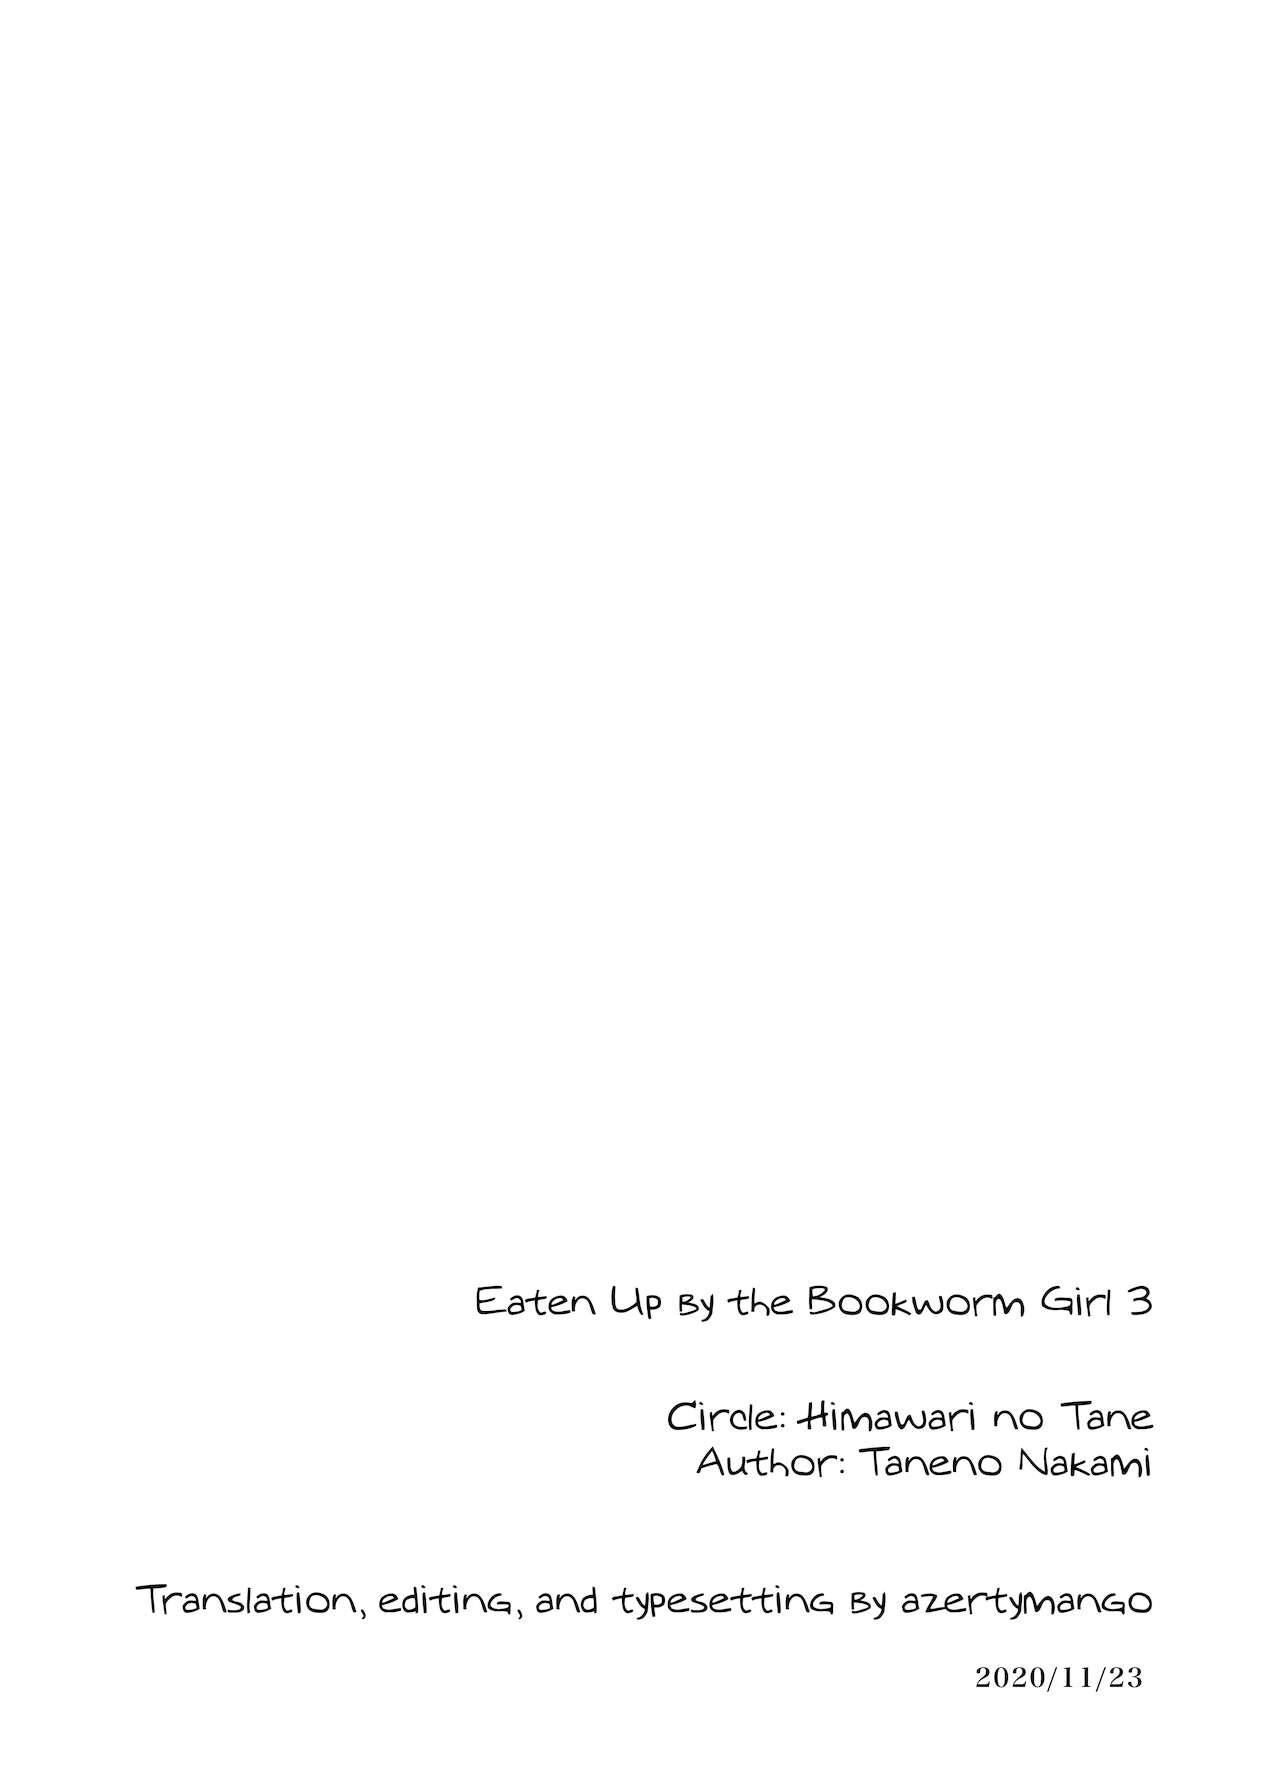 Bungaku Joshi ni Taberareru 3 | Eaten Up by the Bookworm Girl 3 106